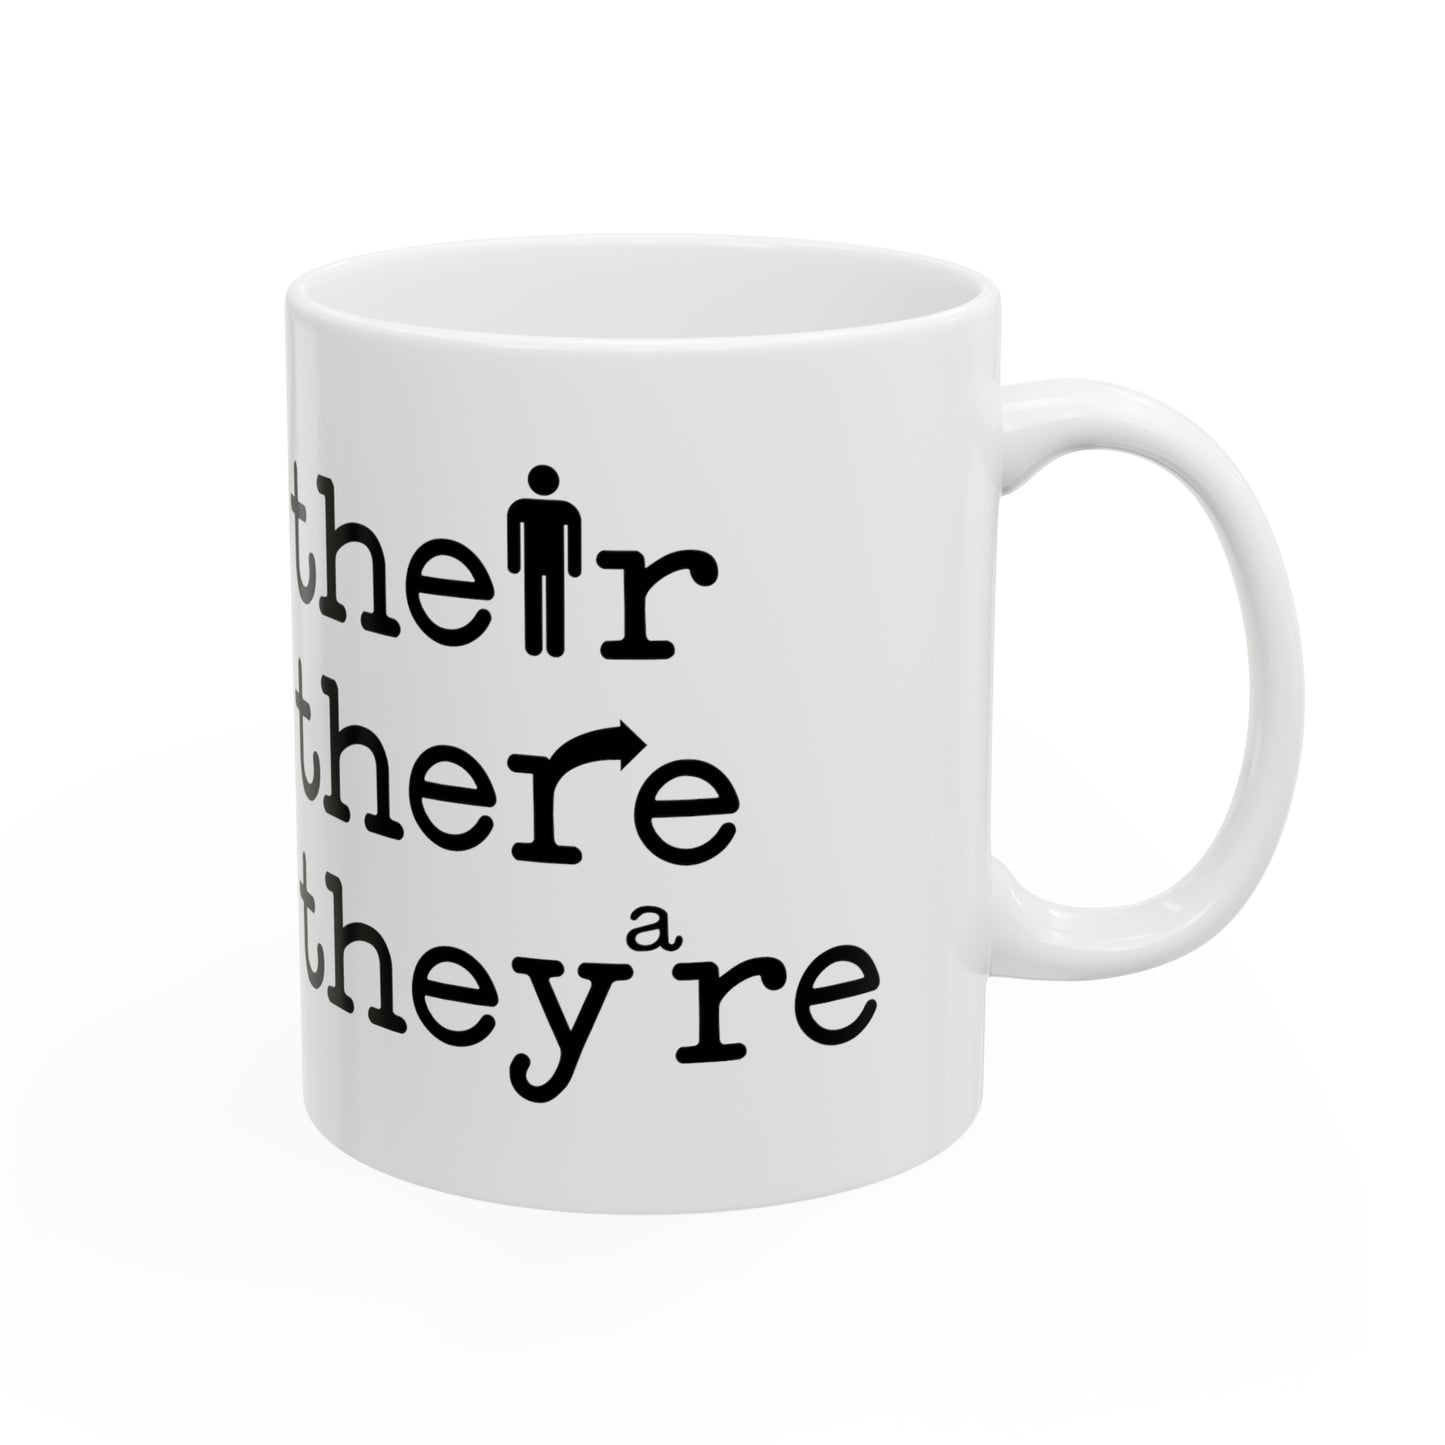 nerdy coffee mug